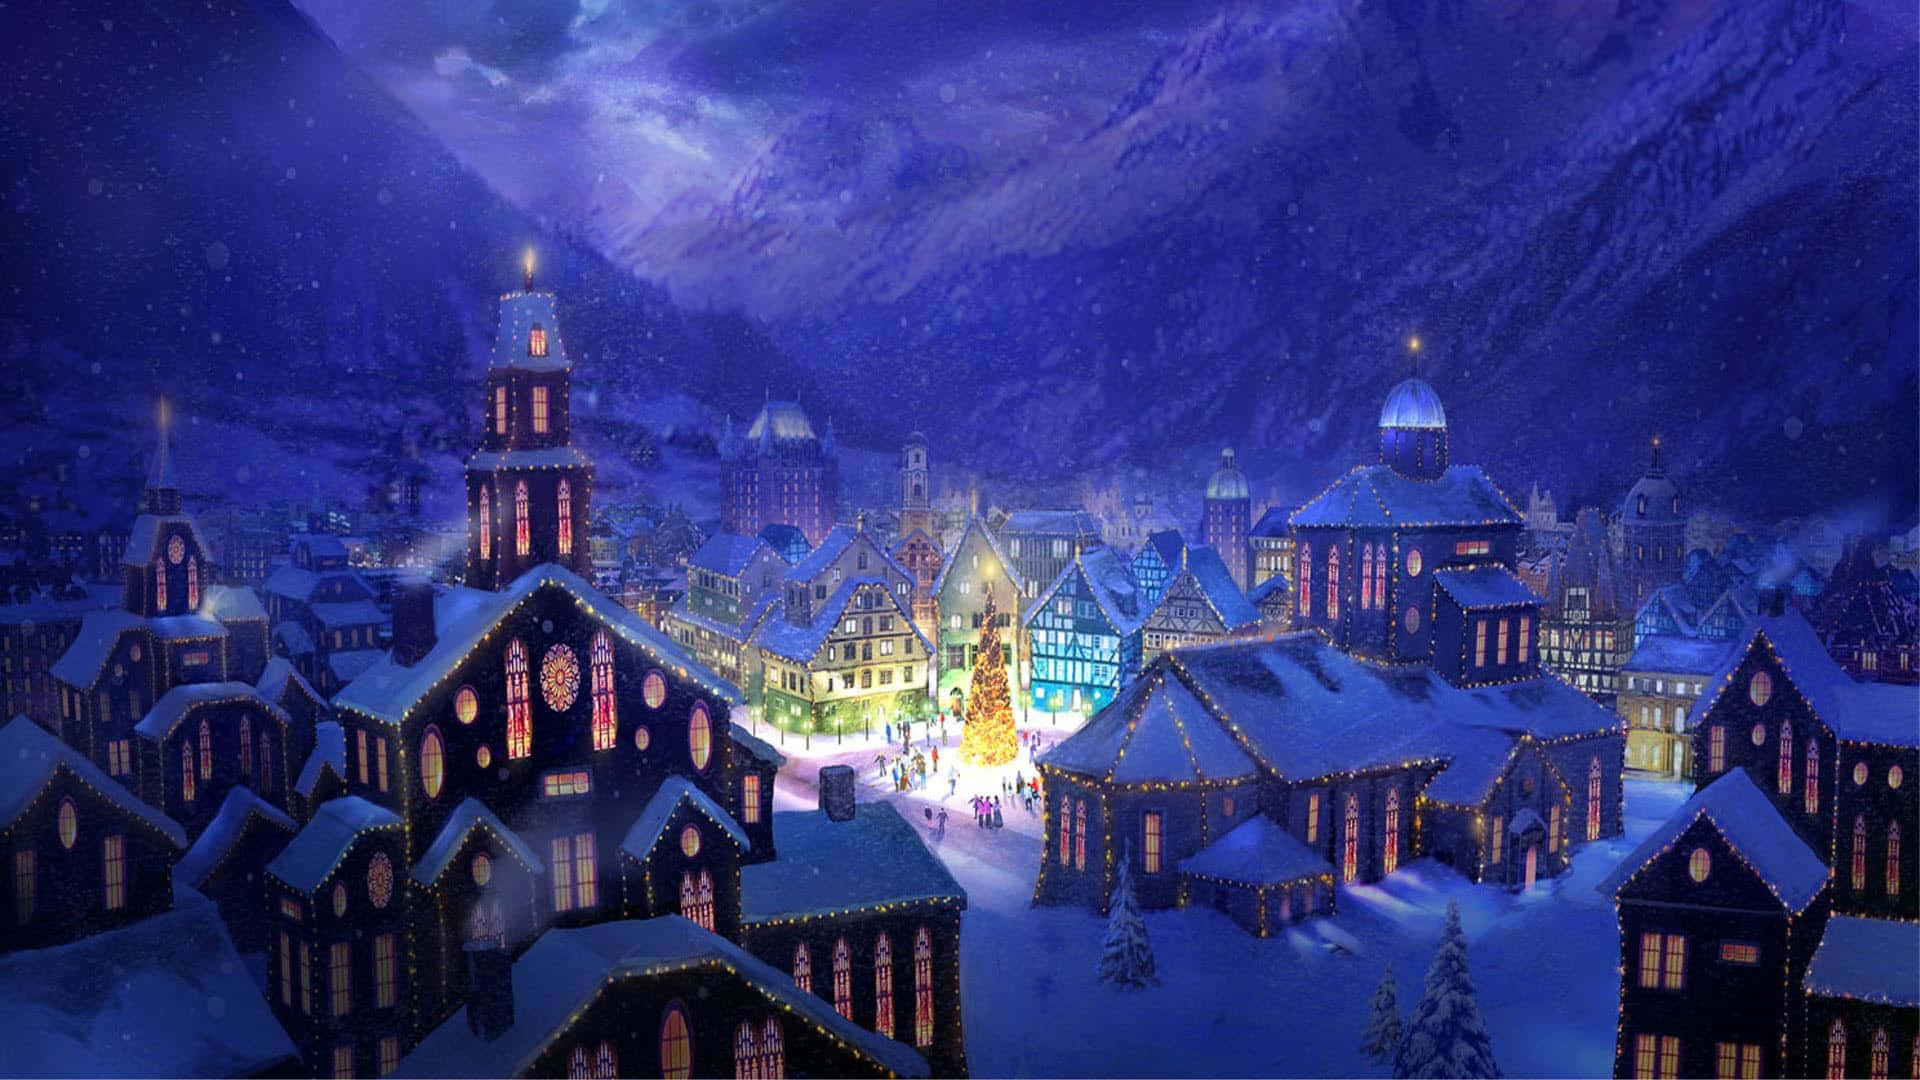 Mountain Village During Holiday Season Wallpaper